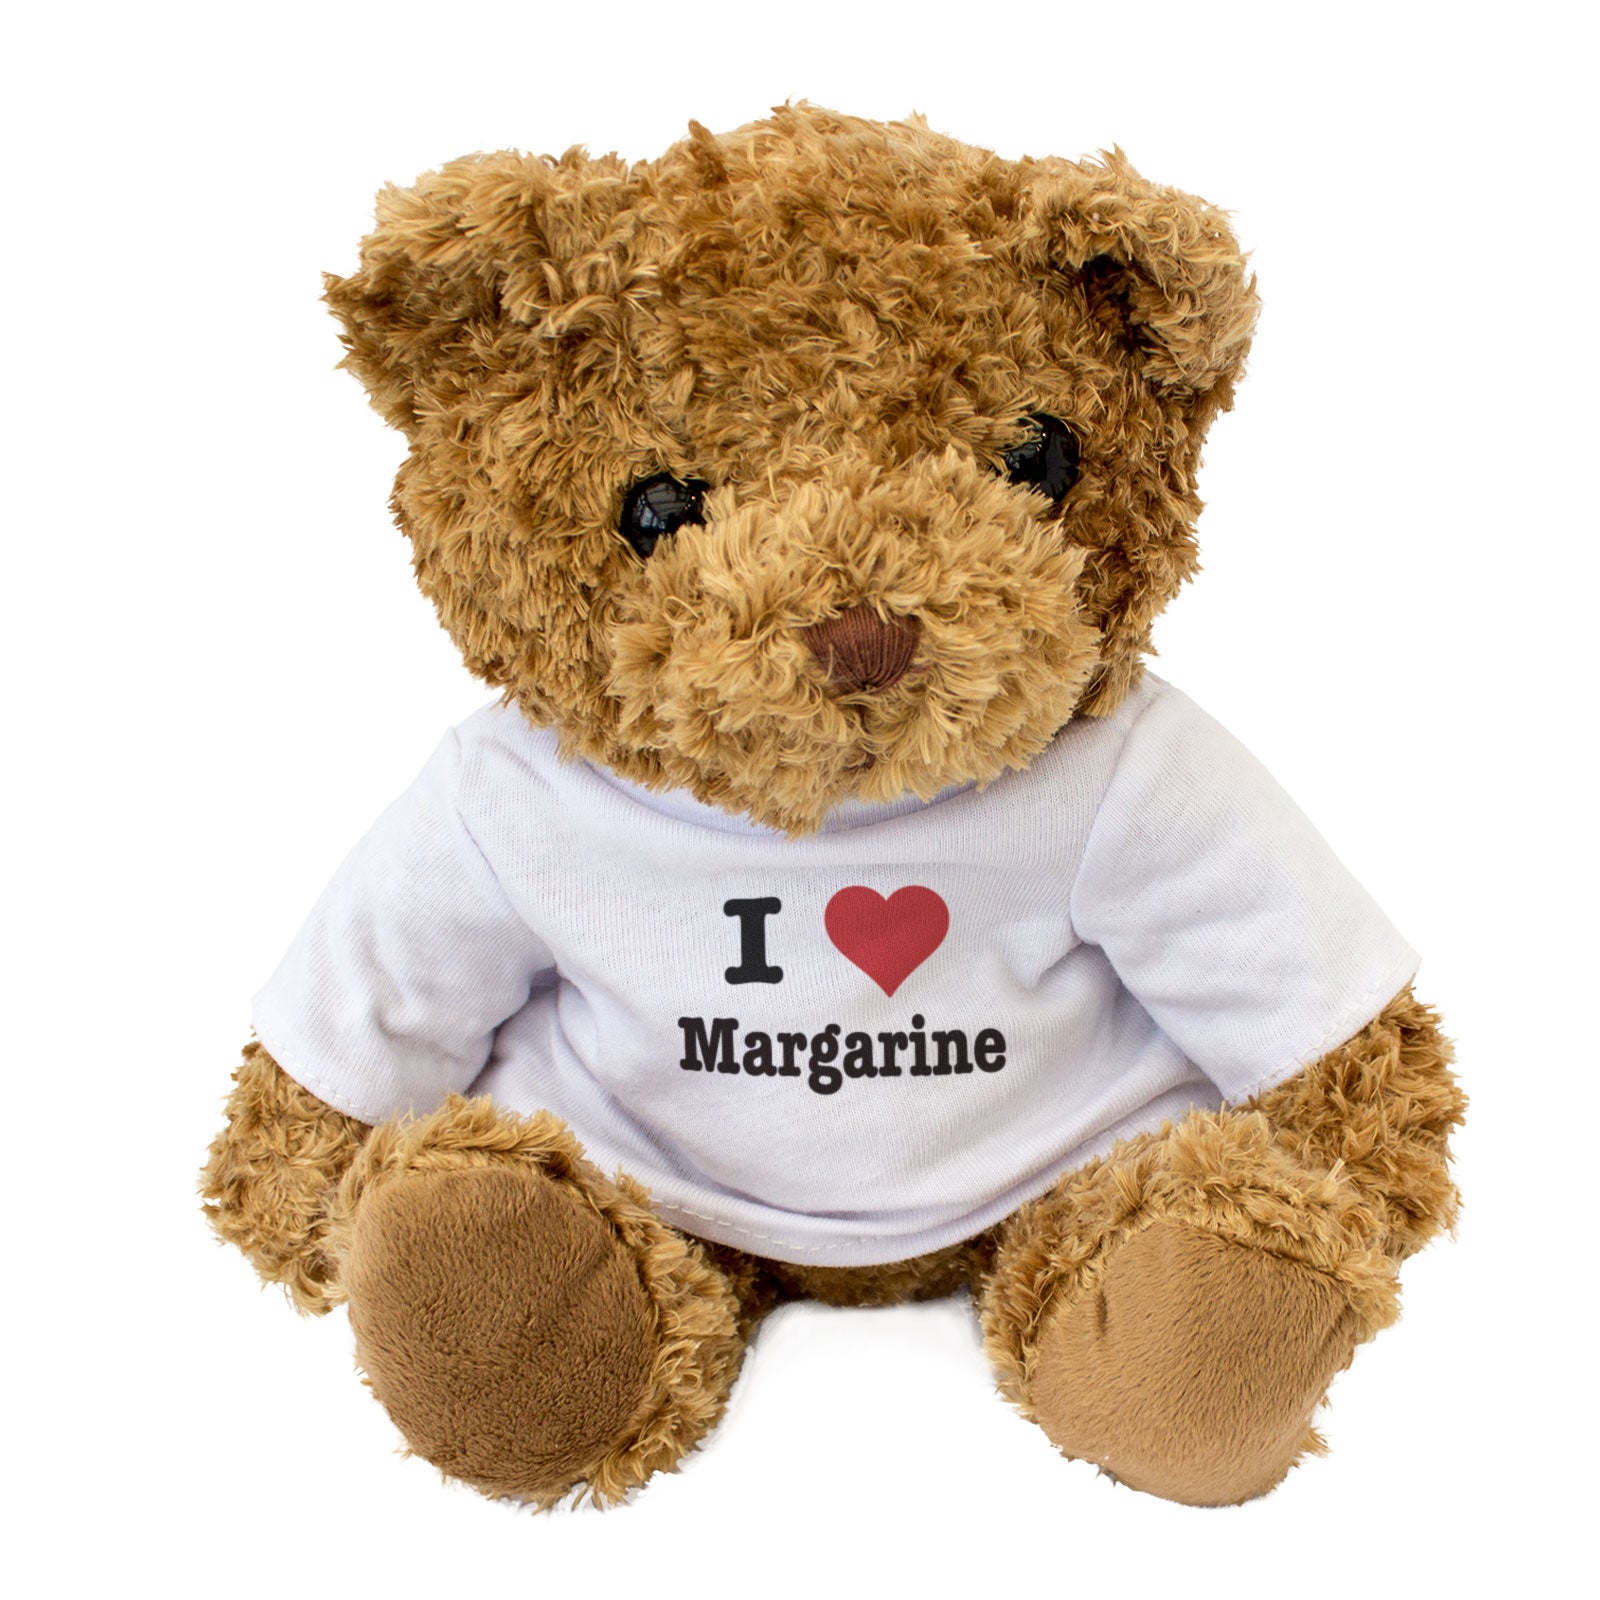 I Love Margarine - Teddy Bear